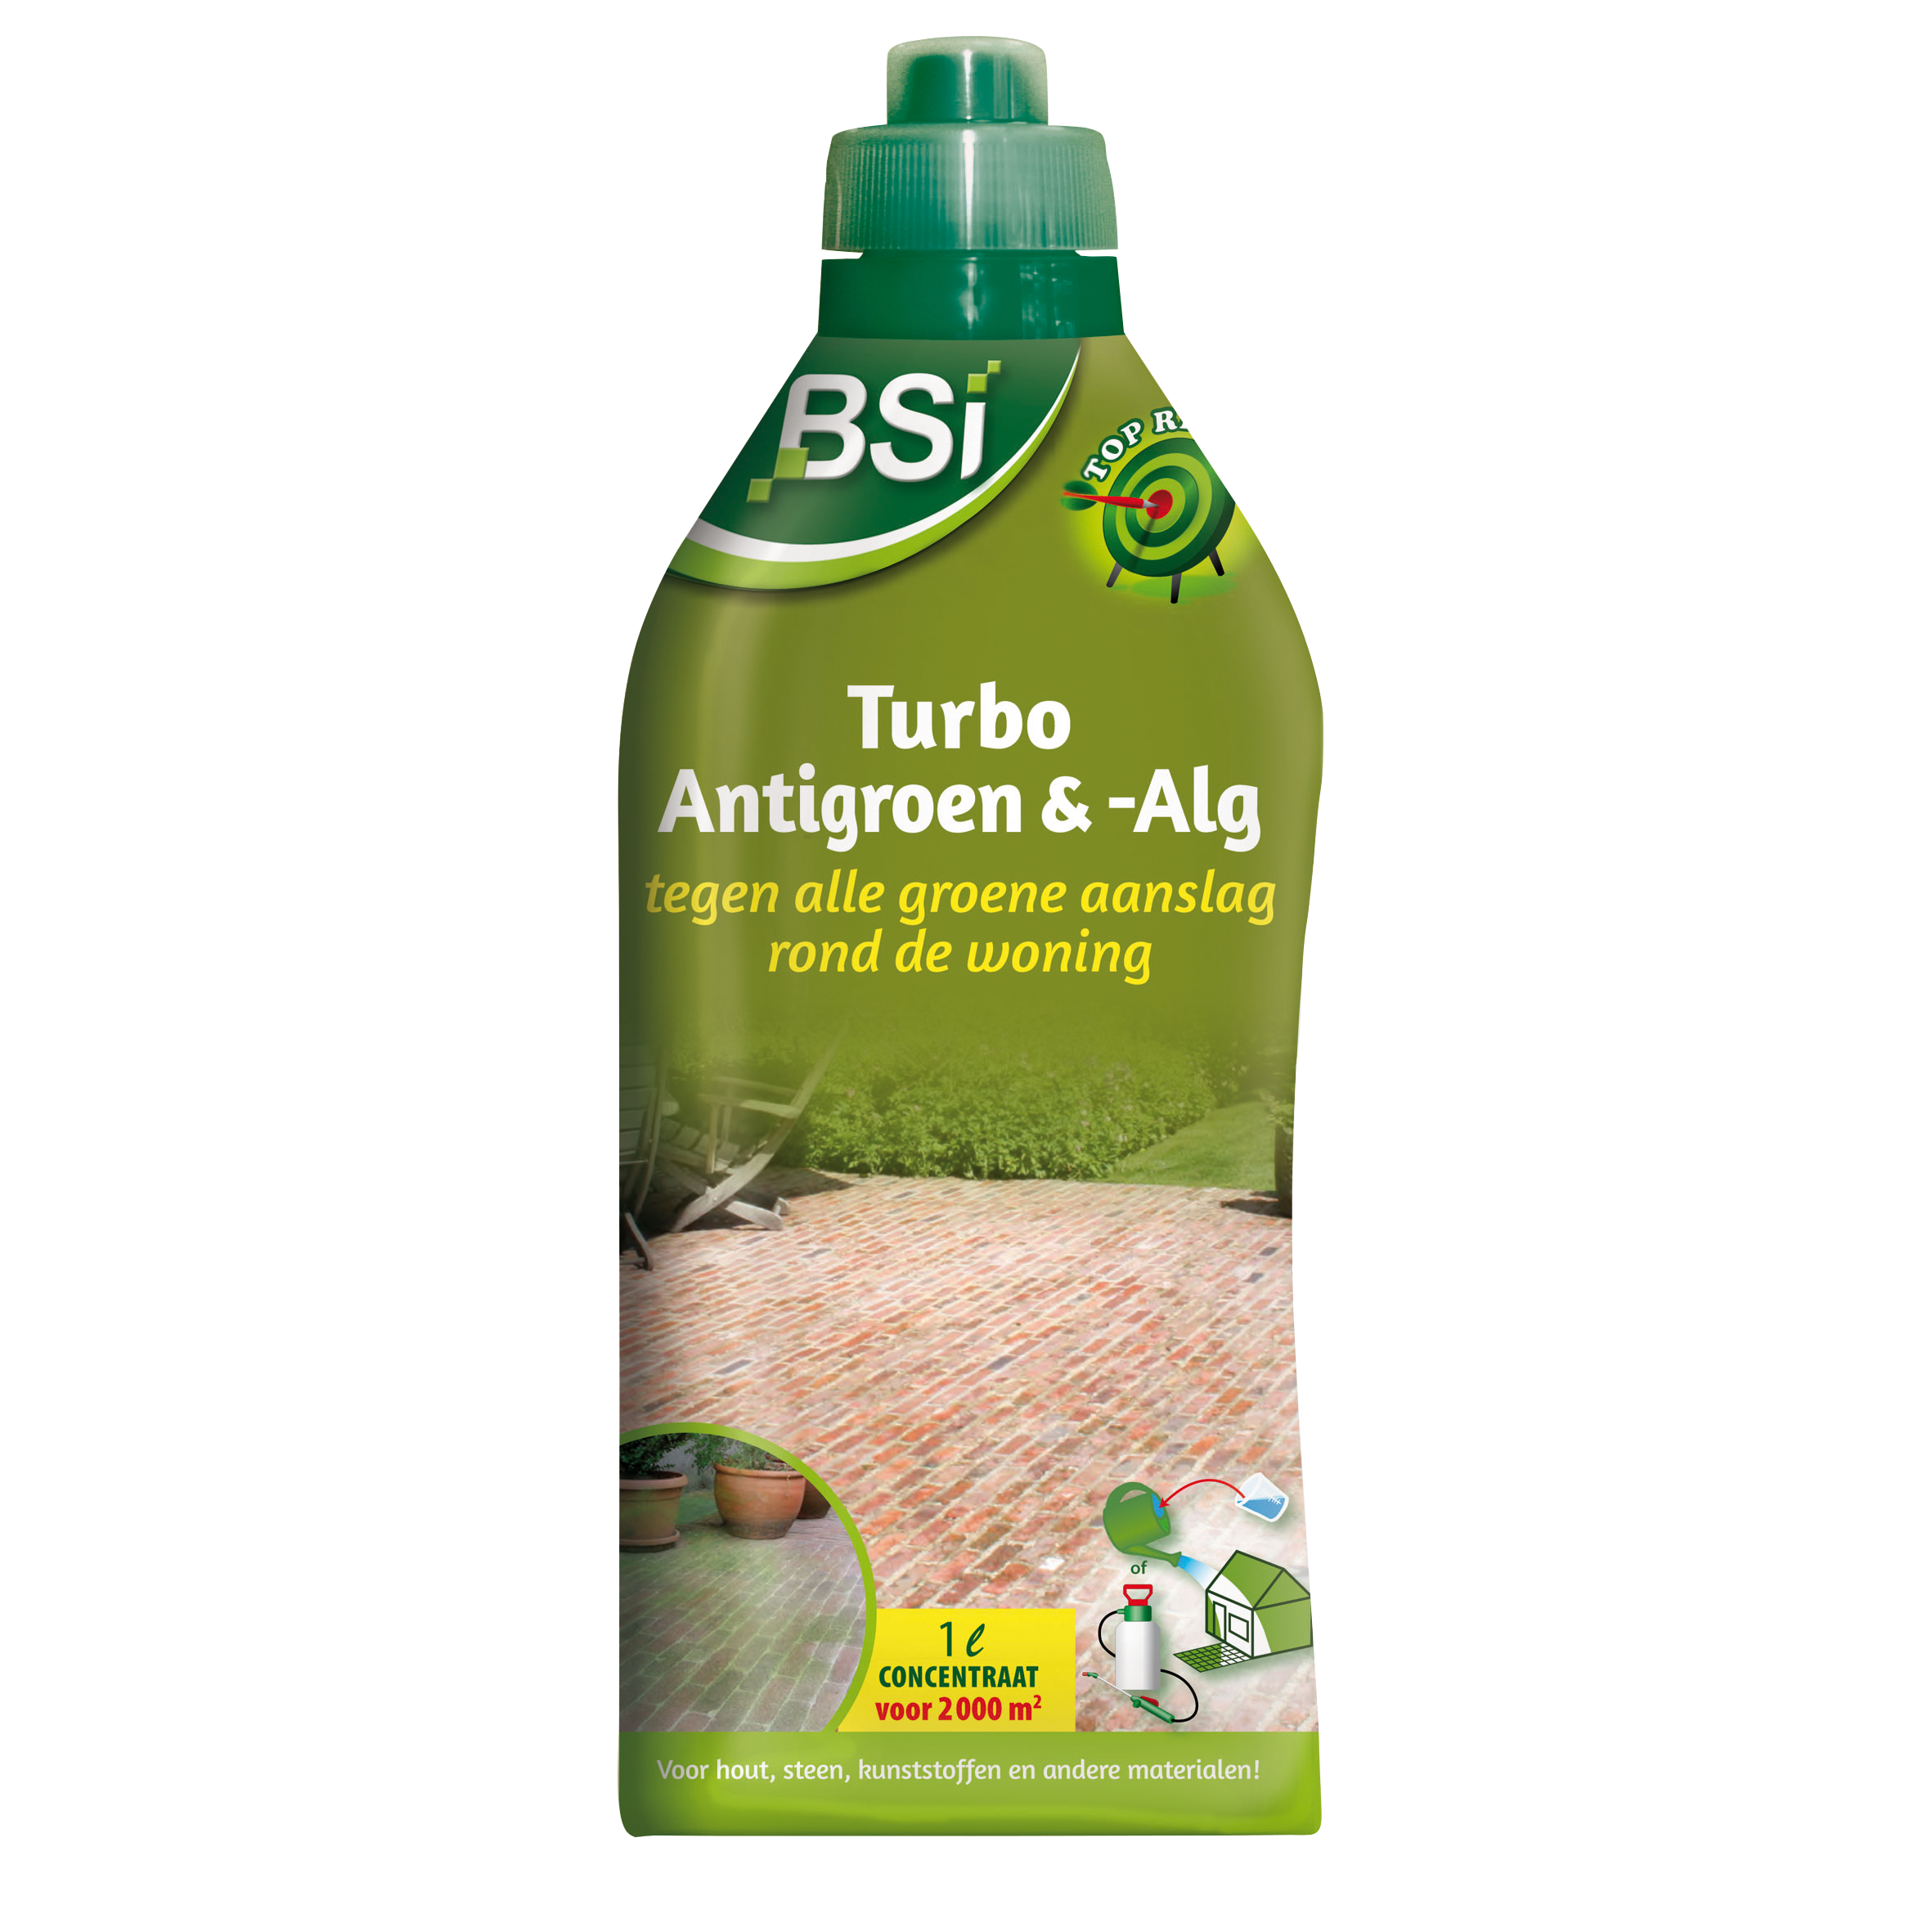 Turbo Anti-groen & Alg 1L (NL) image